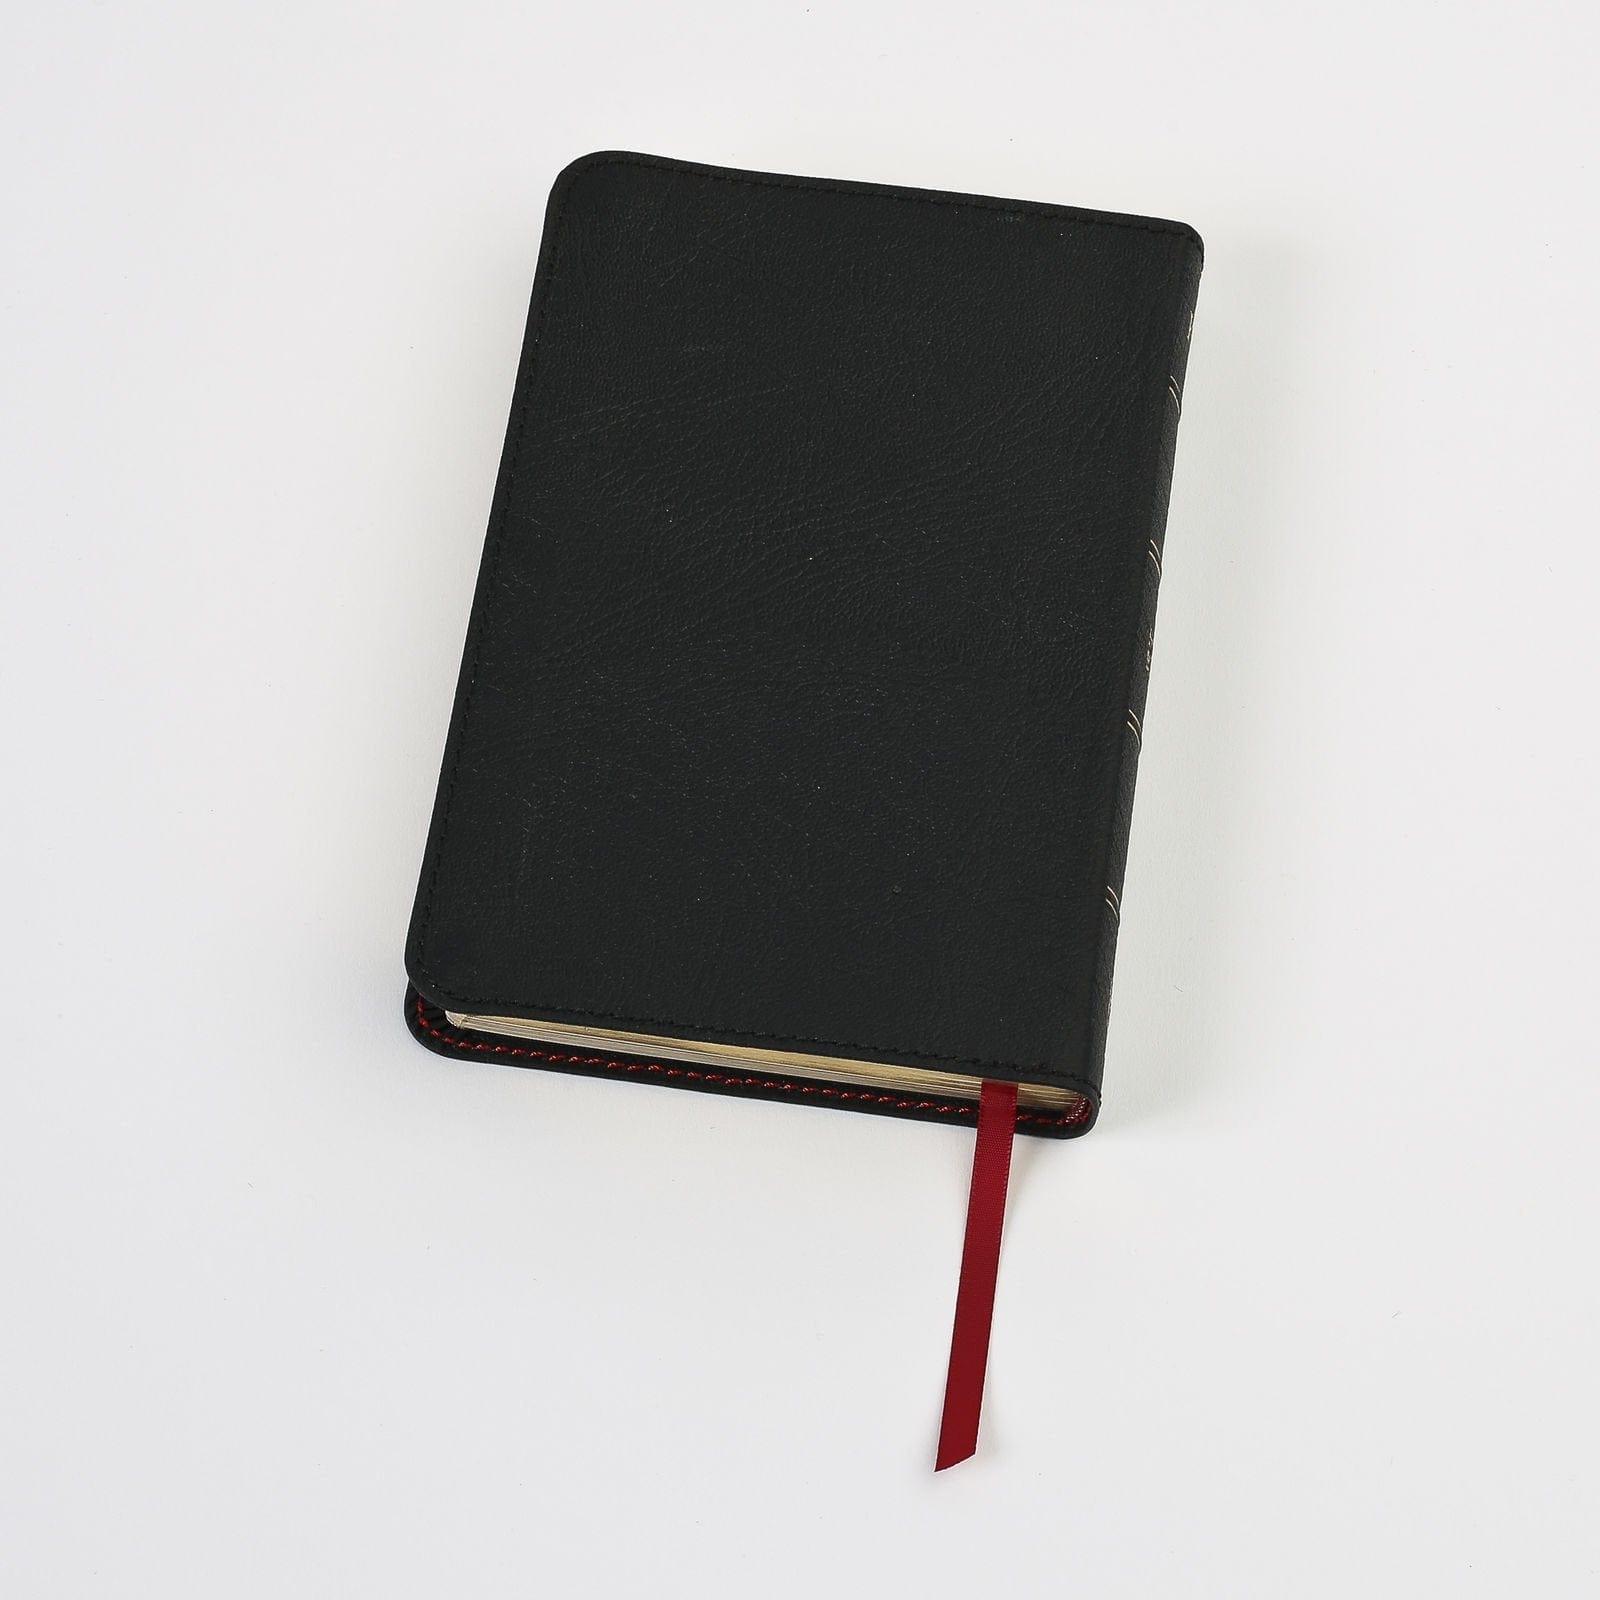 Minister's Pocket Bible: KJV Edition, Black Genuine Leather - Pura Vida Books